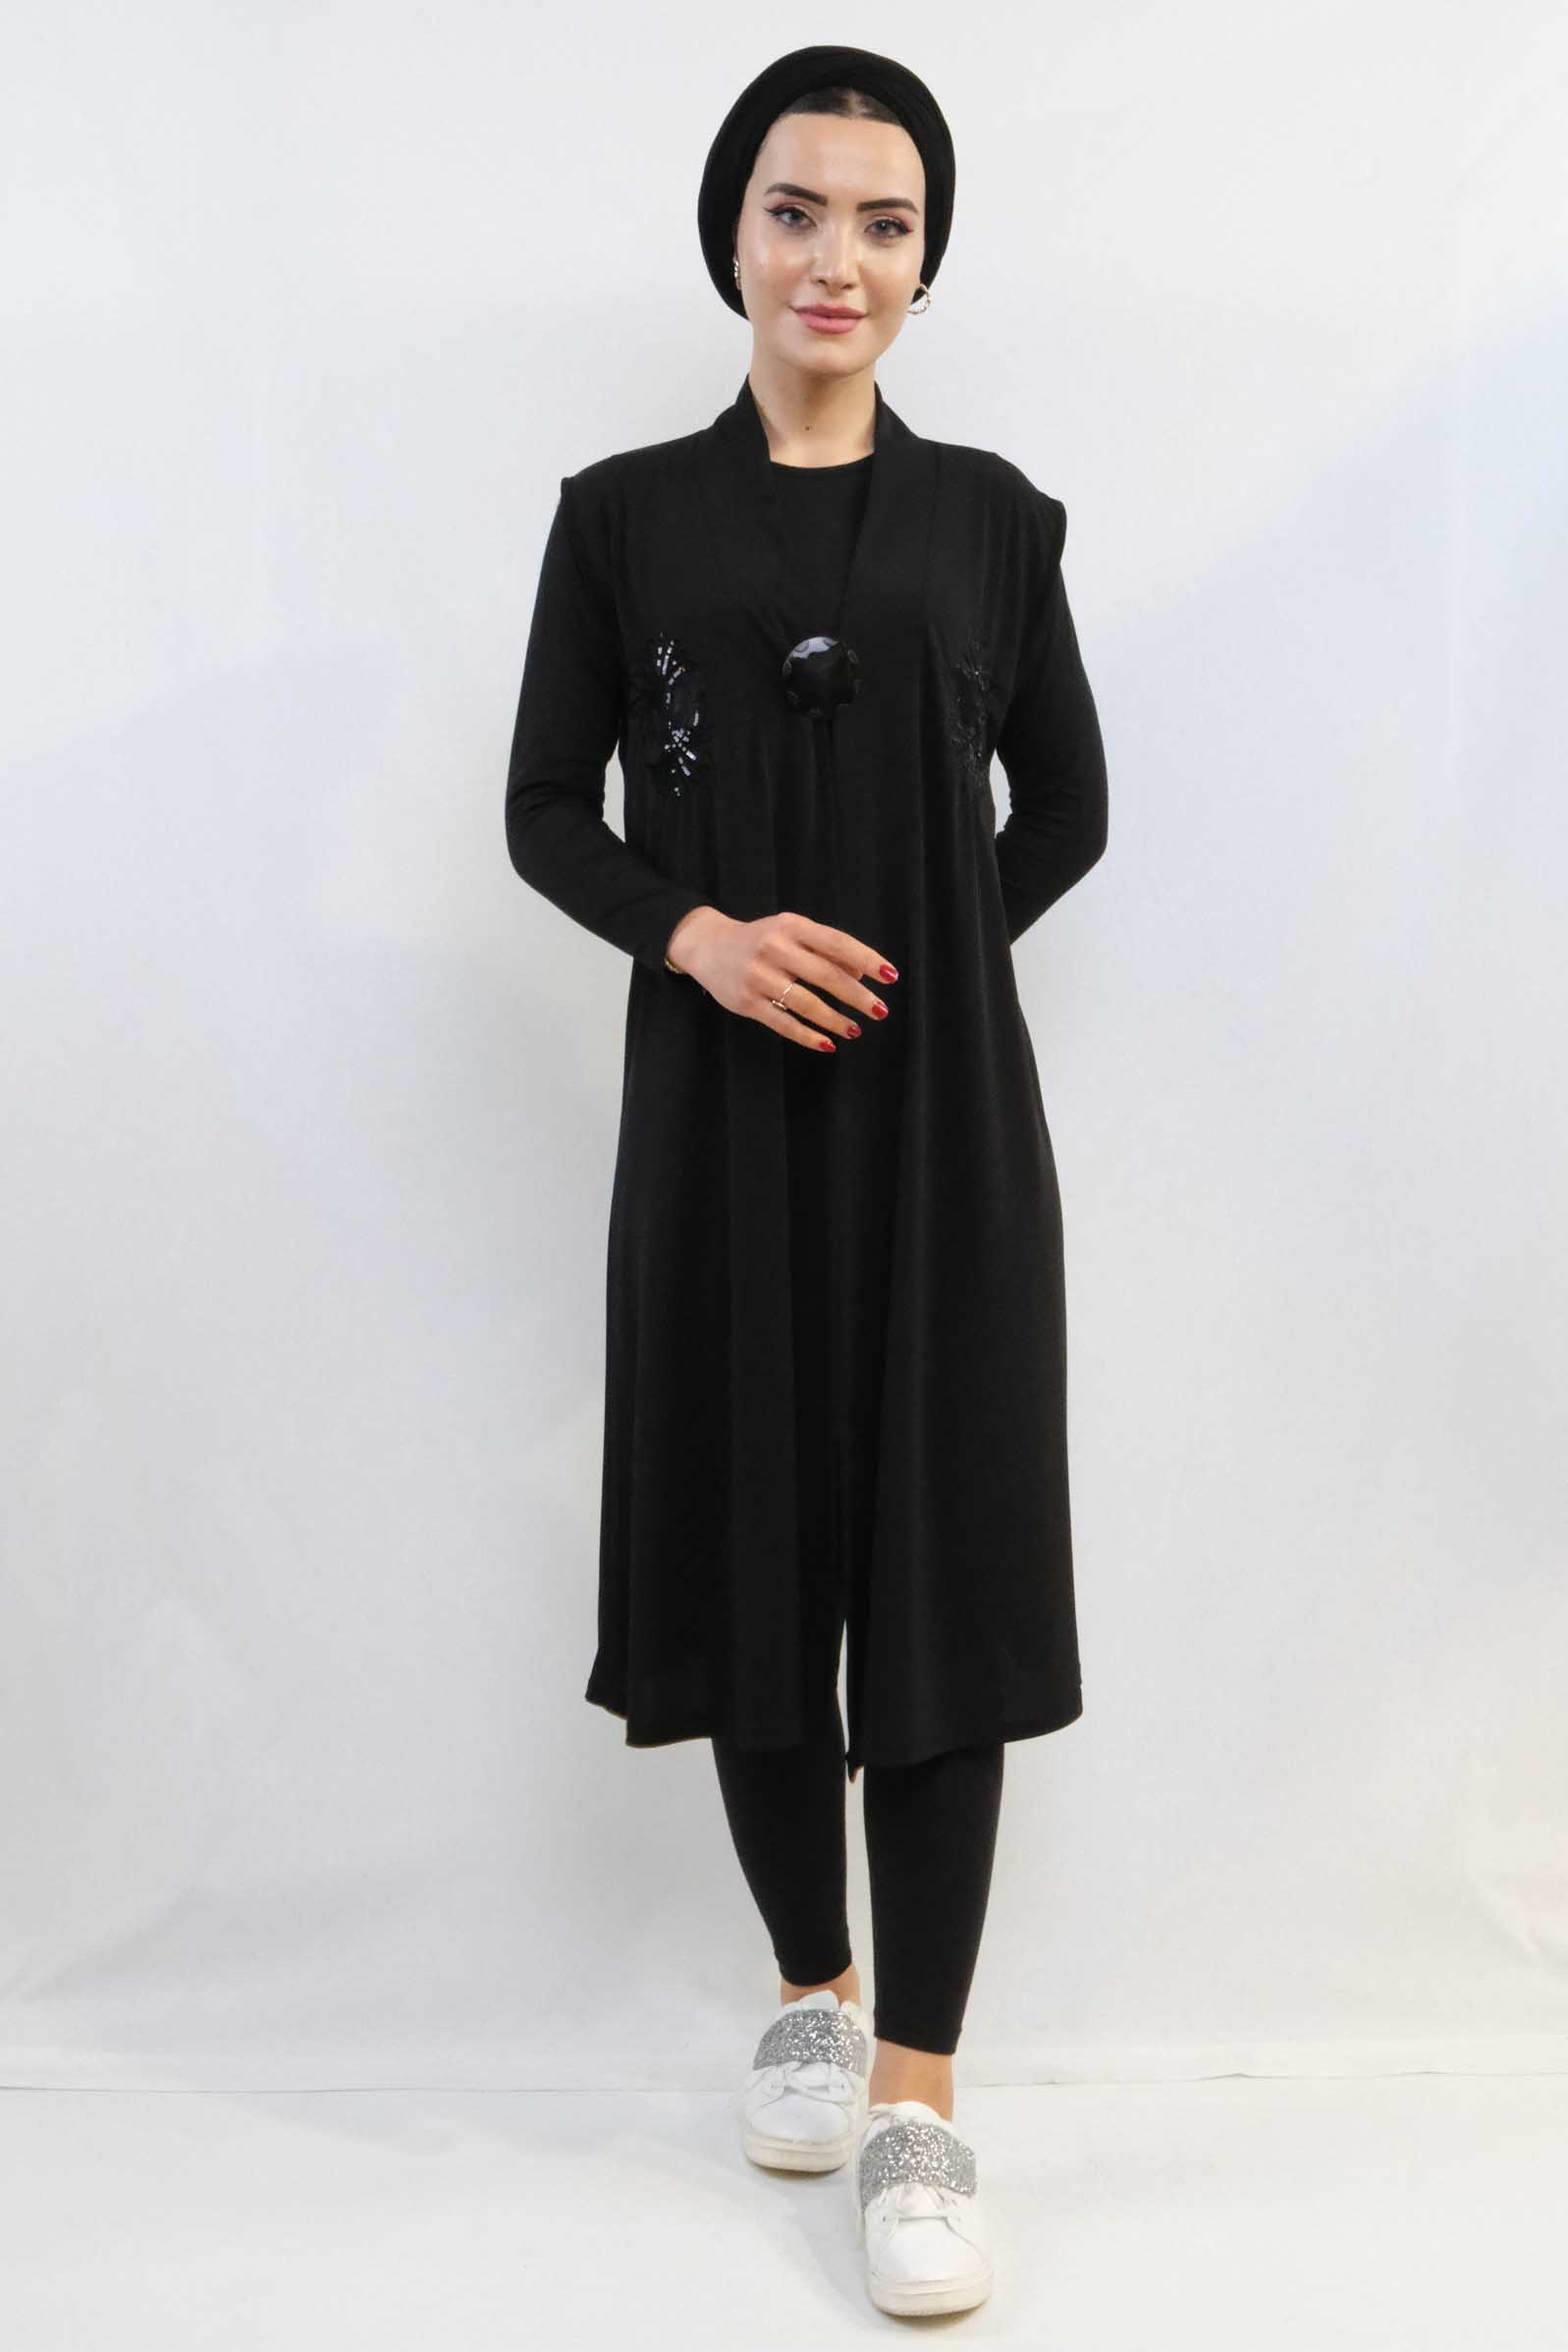 Moda Çizgi Pullu Nakış İşlemeli Yelek Mc724 Siyah - XL | SİYAH